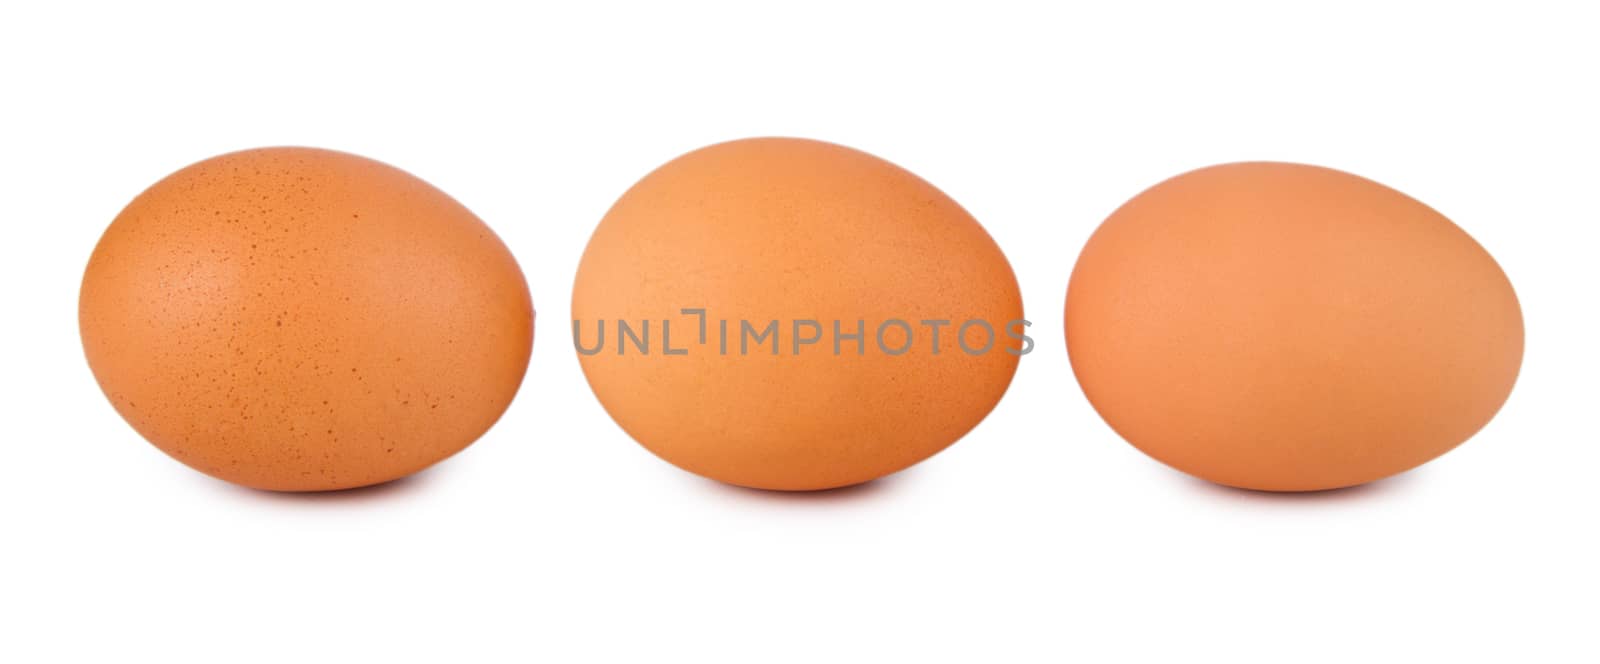 Three brown eggs by grigorenko